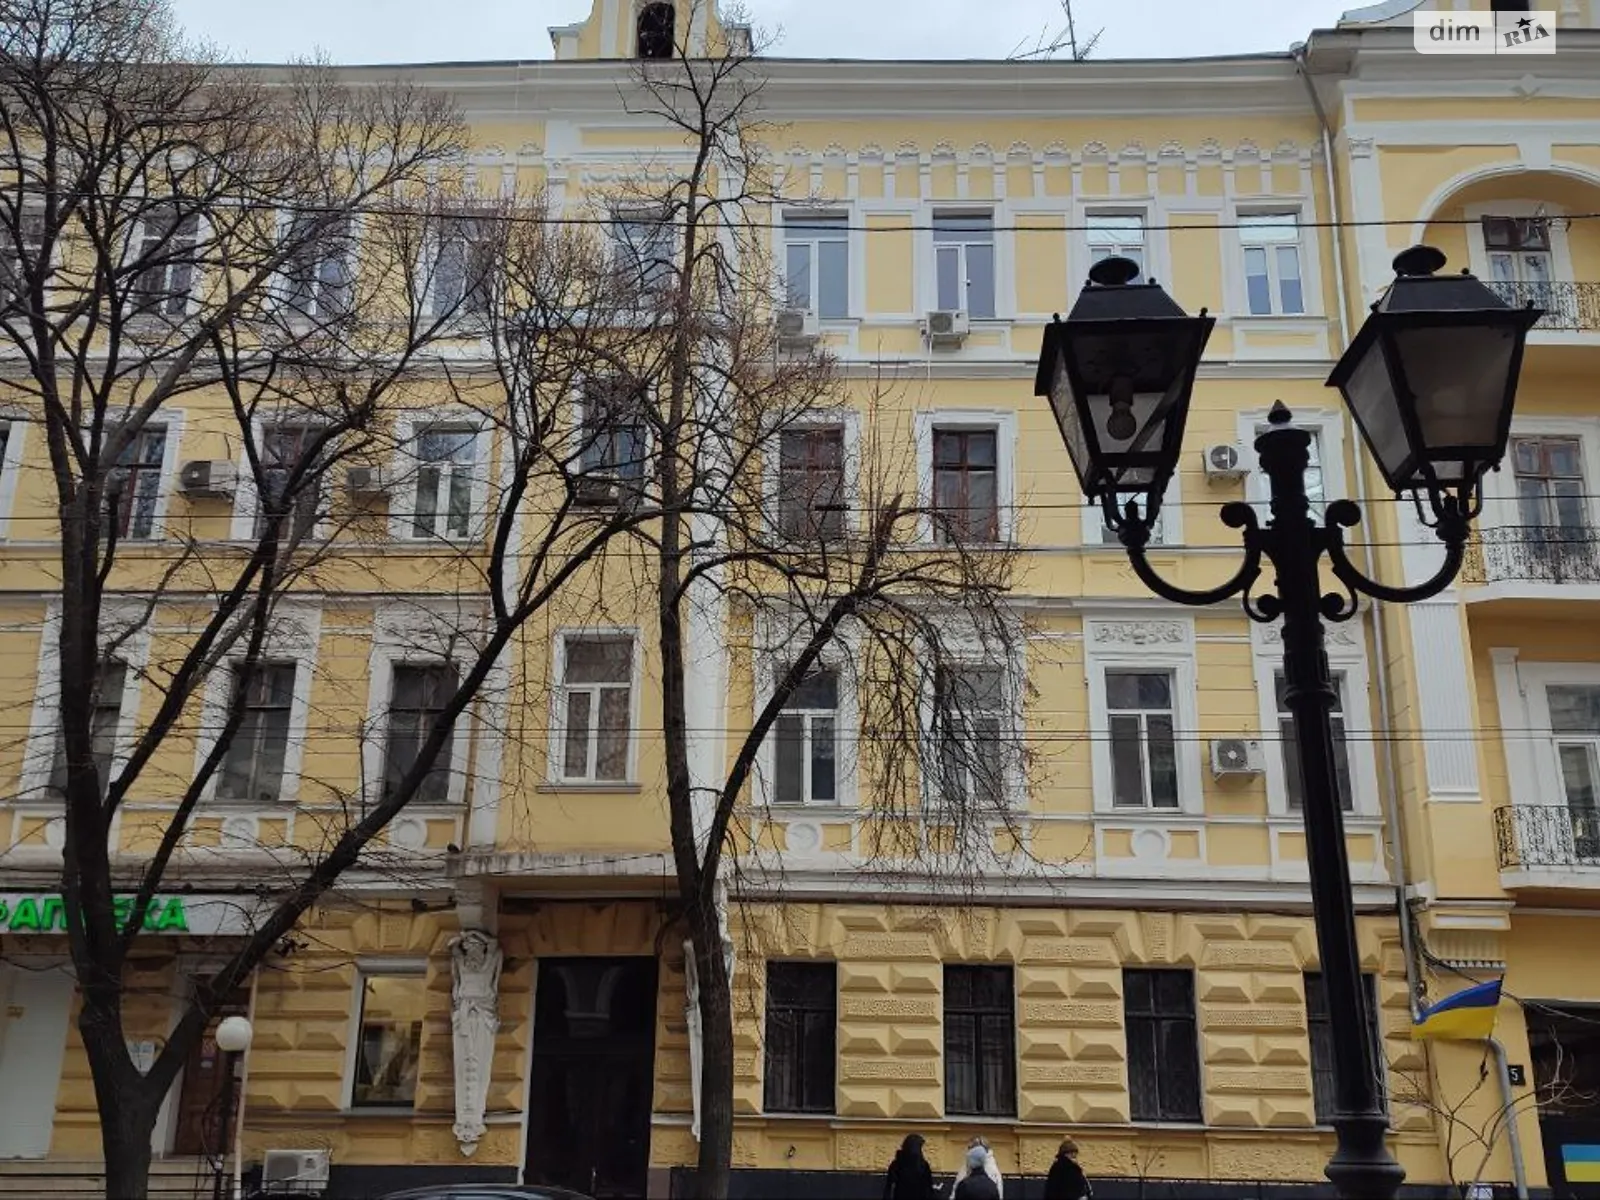 Продается комната 33 кв. м в Одессе, цена: 15000 $ - фото 1